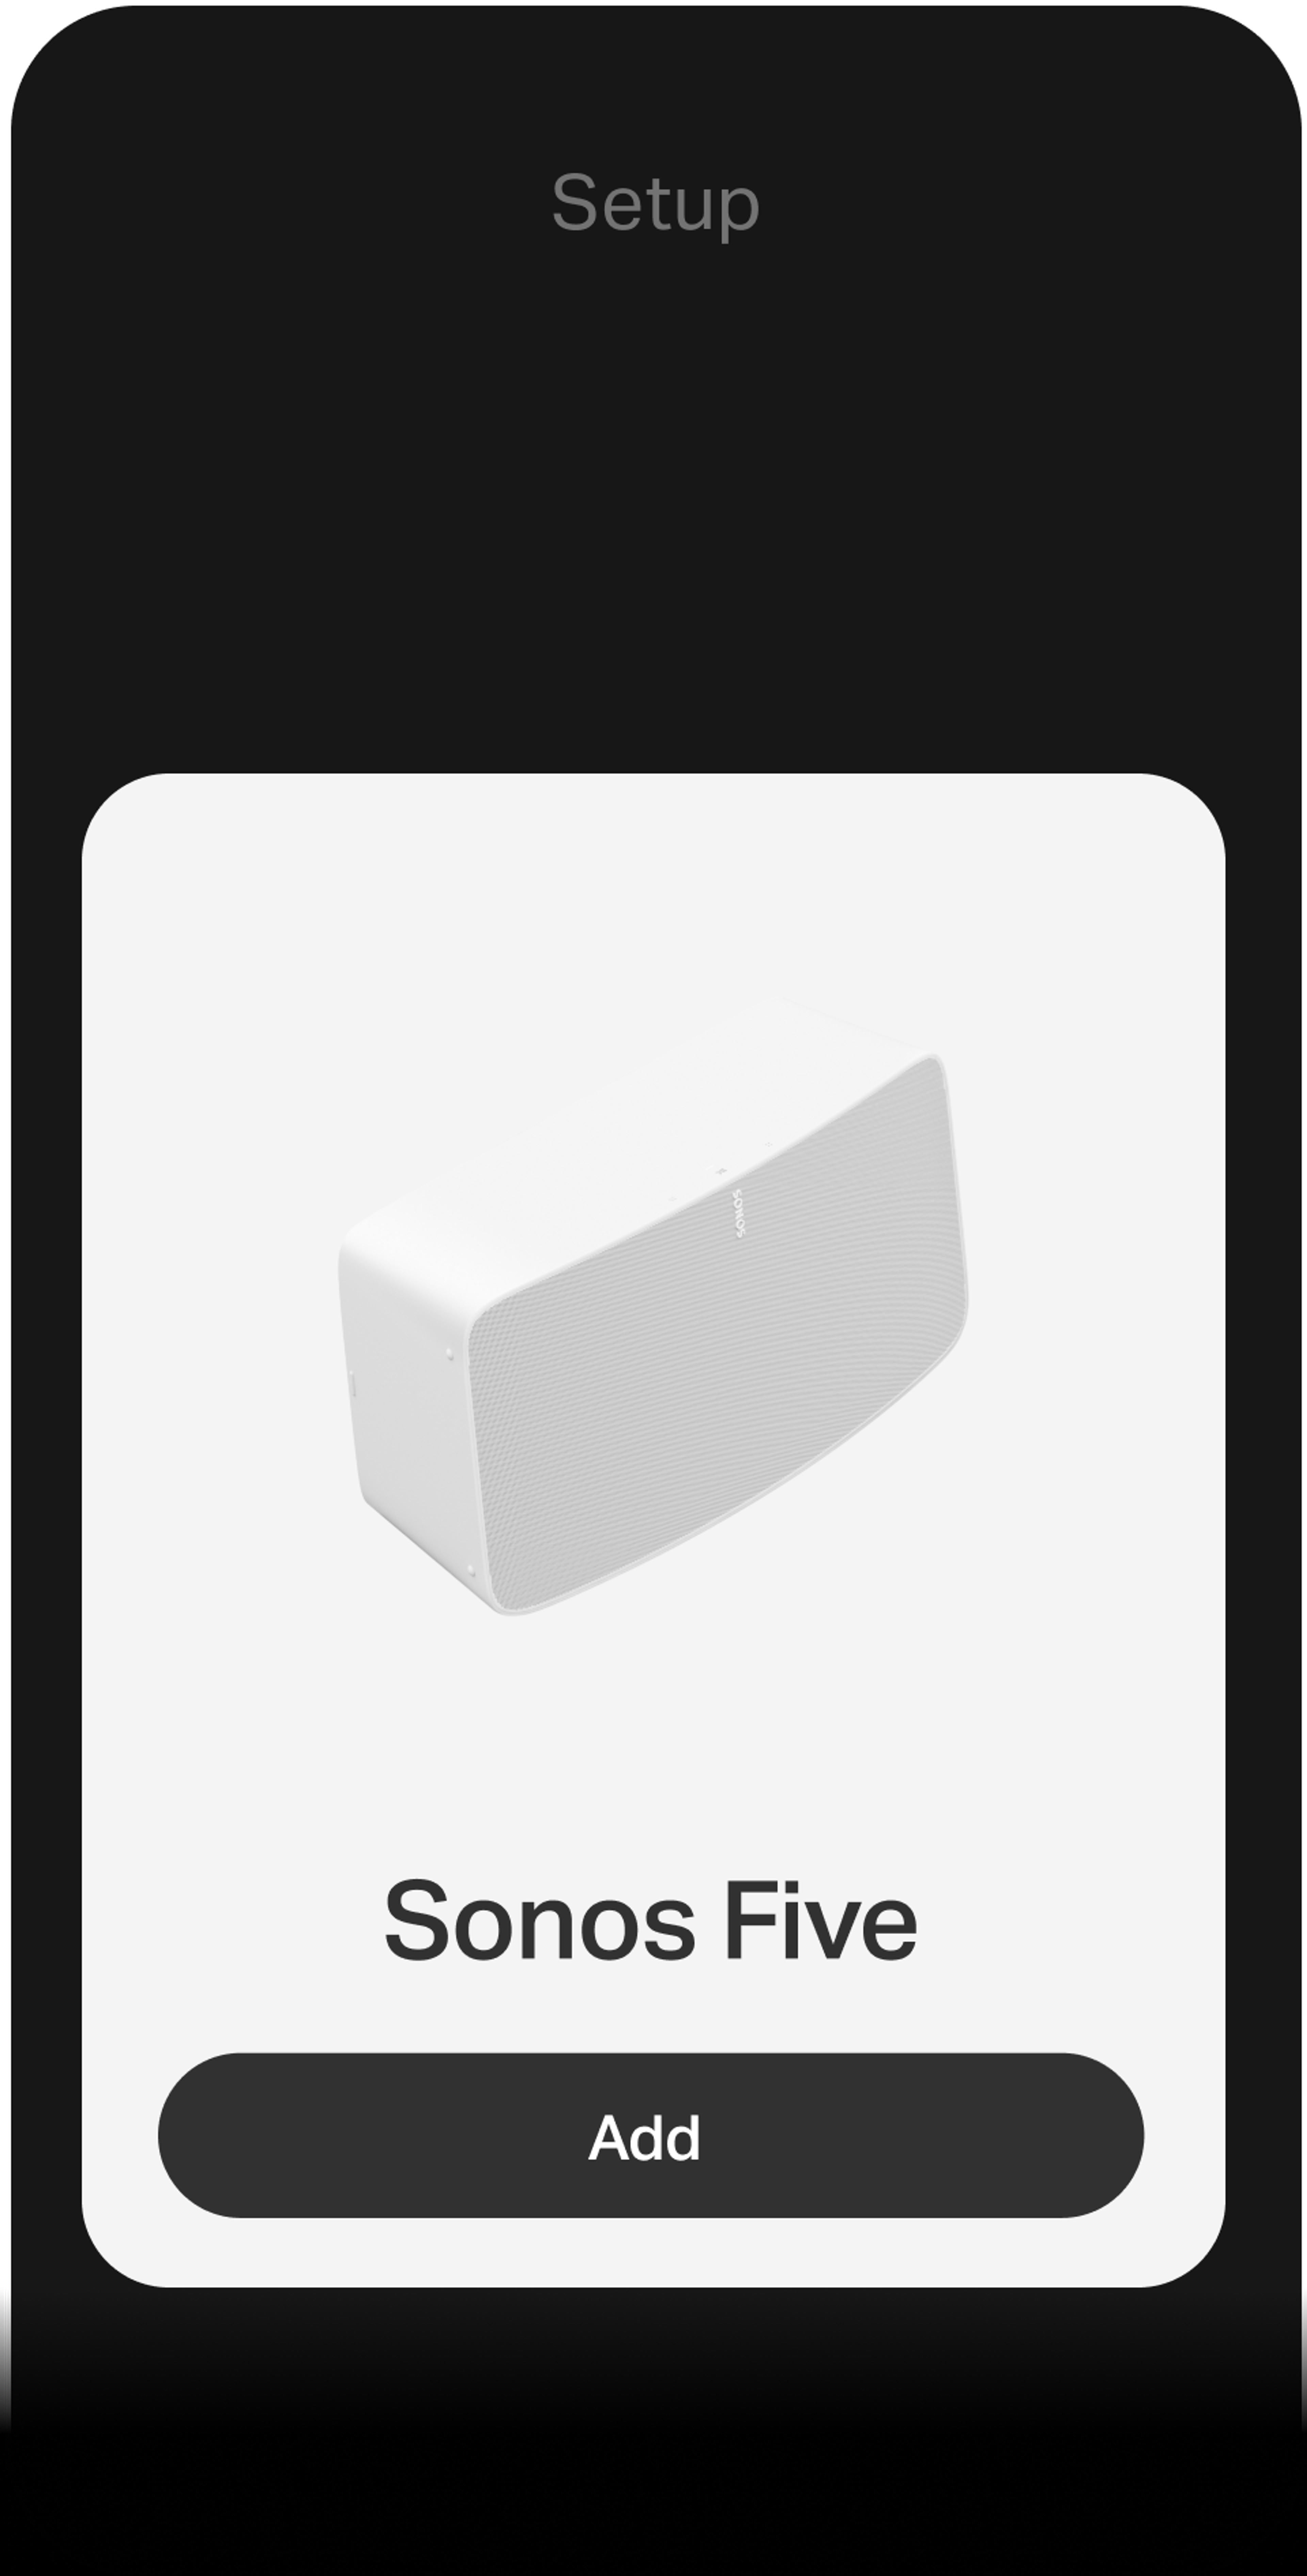 Smartphone showing setup using Sonos app